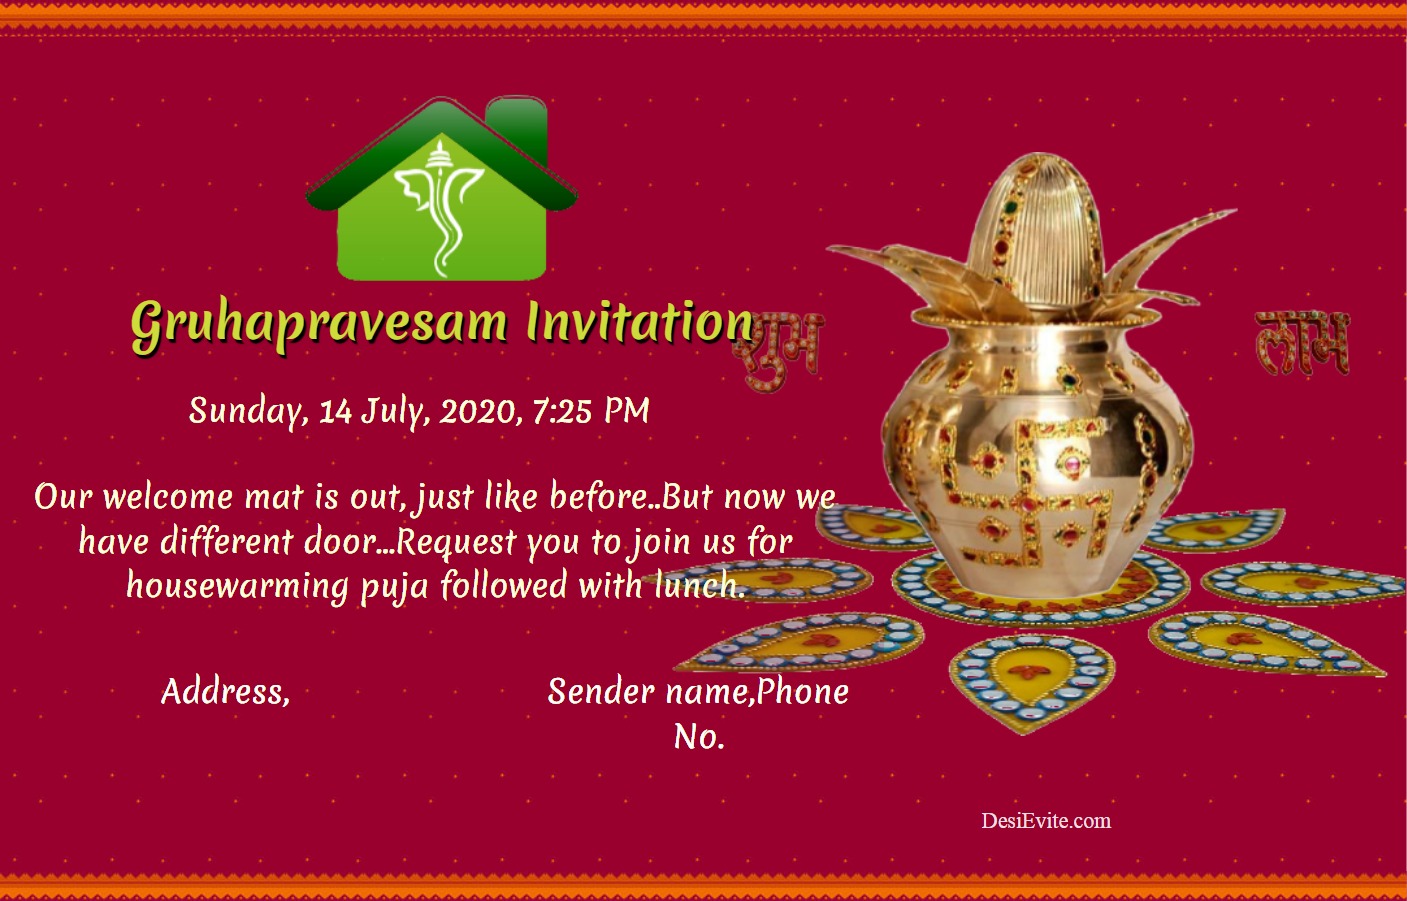 Gruhapravesam Invitation